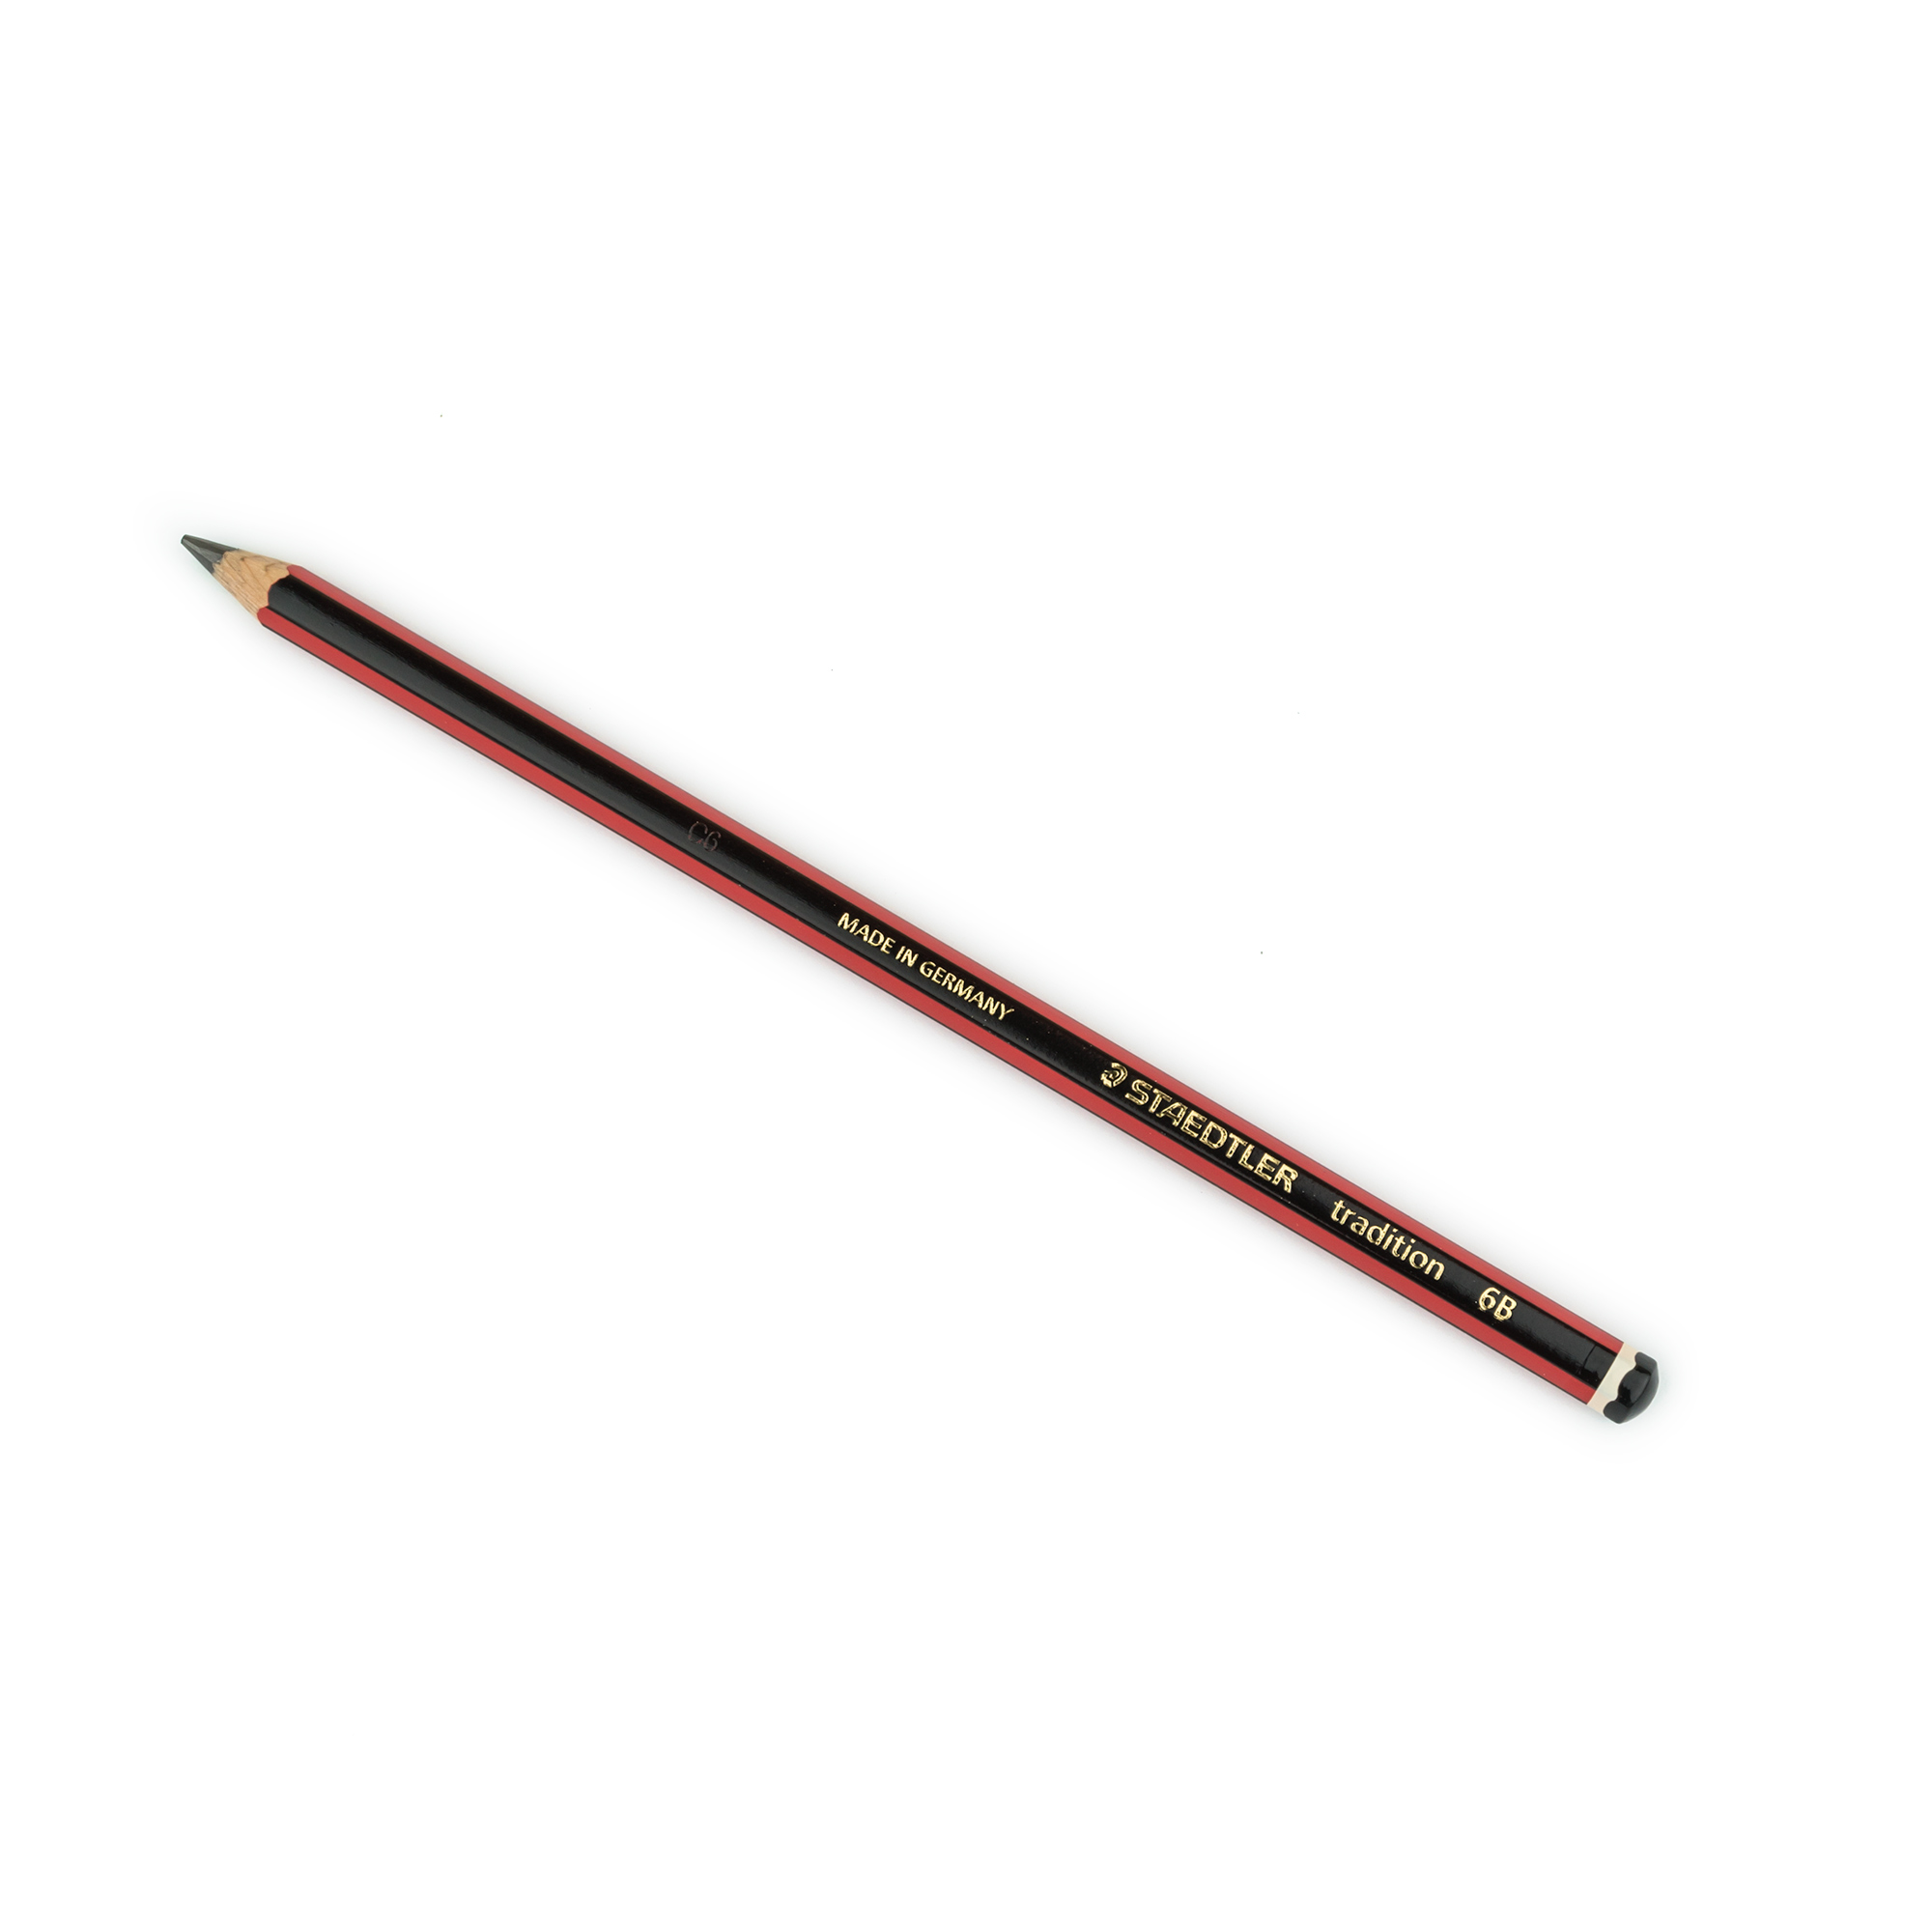 Staedtler Tradition 110 6B pencil – Scribe Market